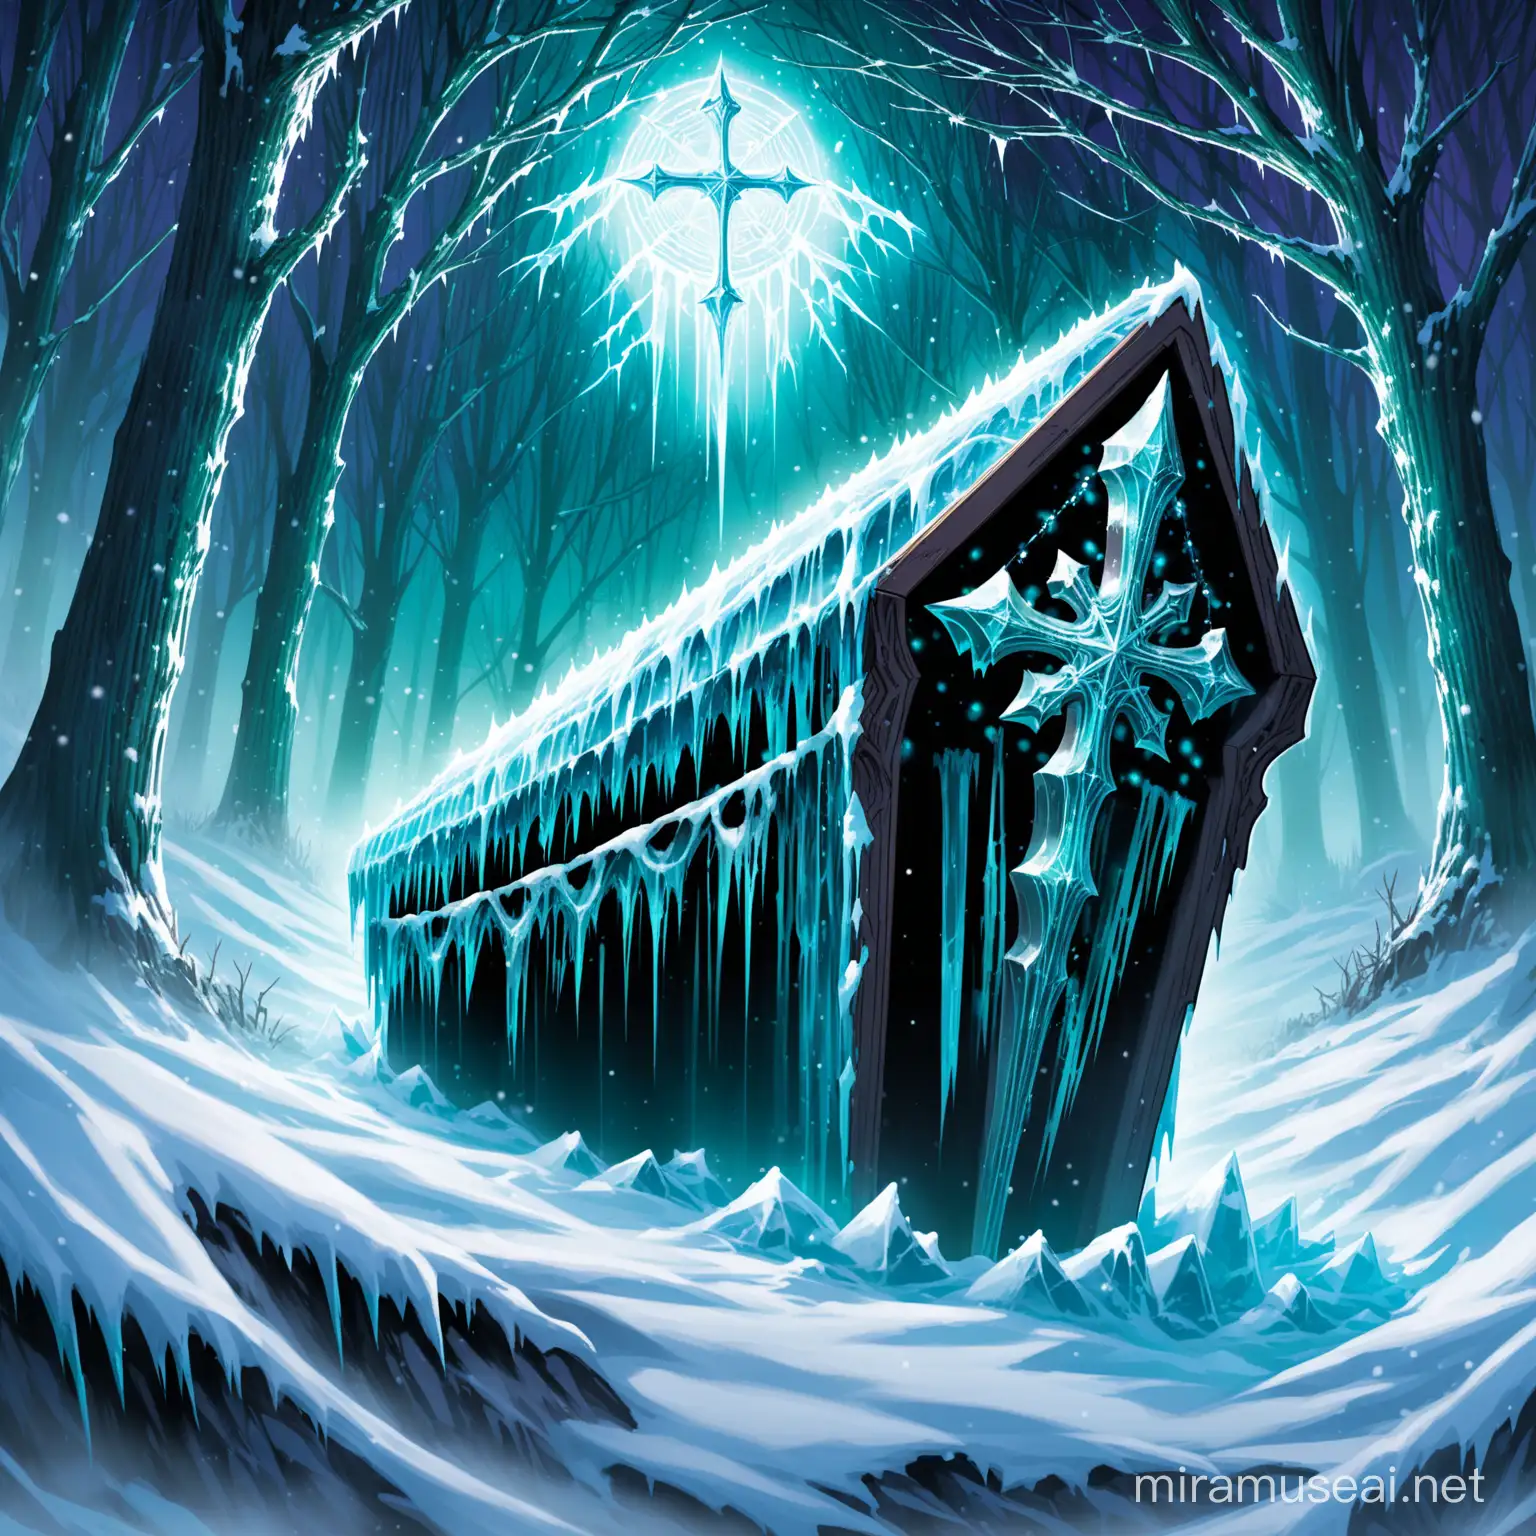 Mystical Nighttime Snowfall Encompassing a Frozen Coffin